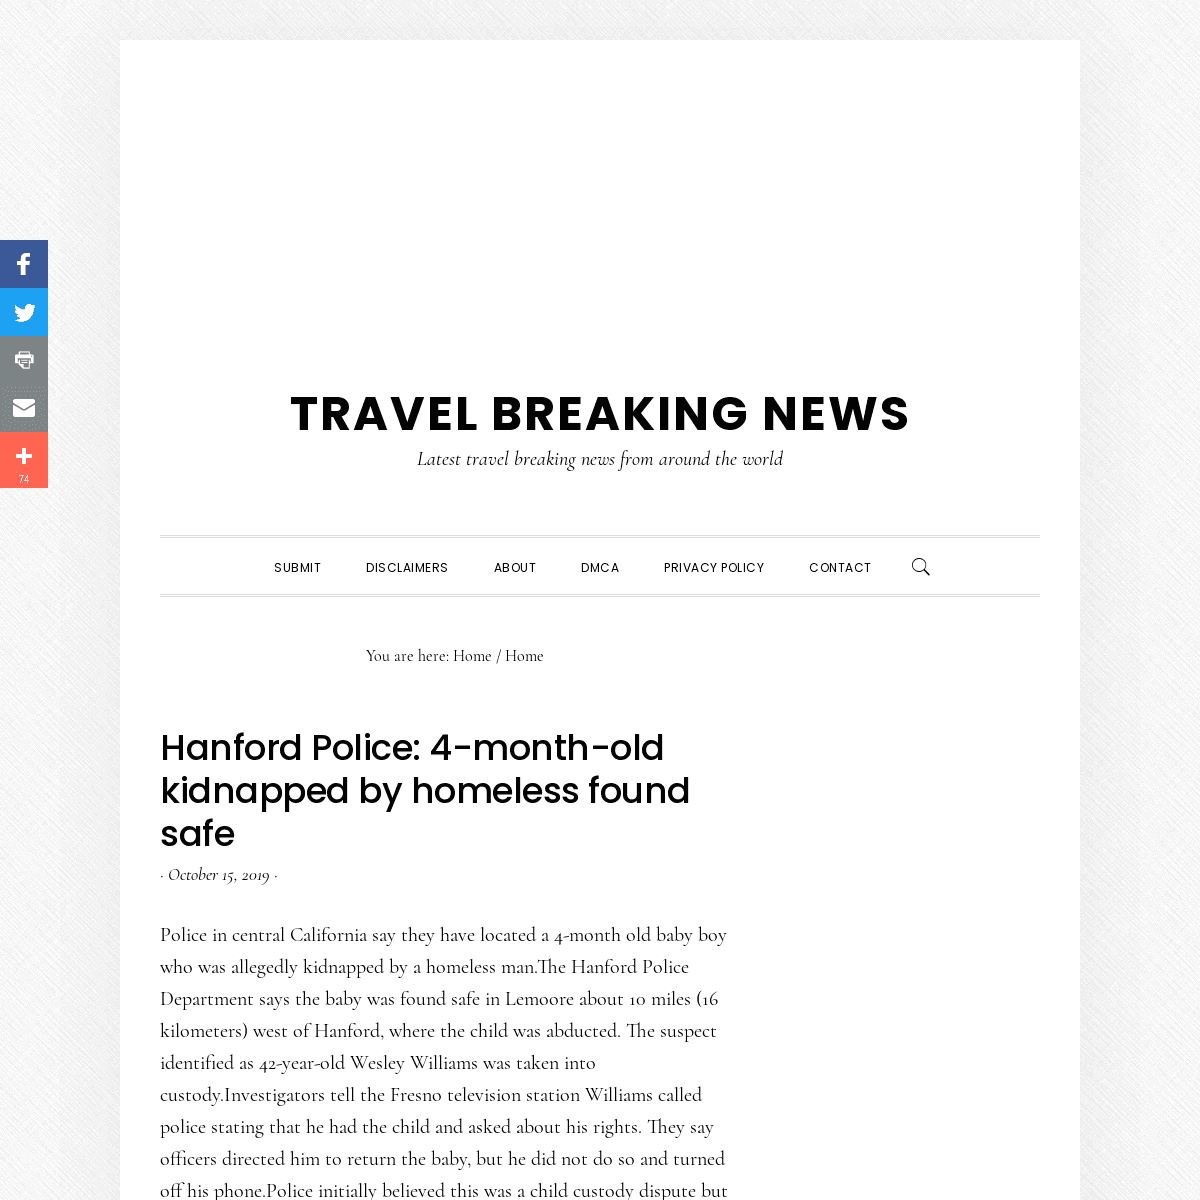 A complete backup of https://travelbreakingnews.net